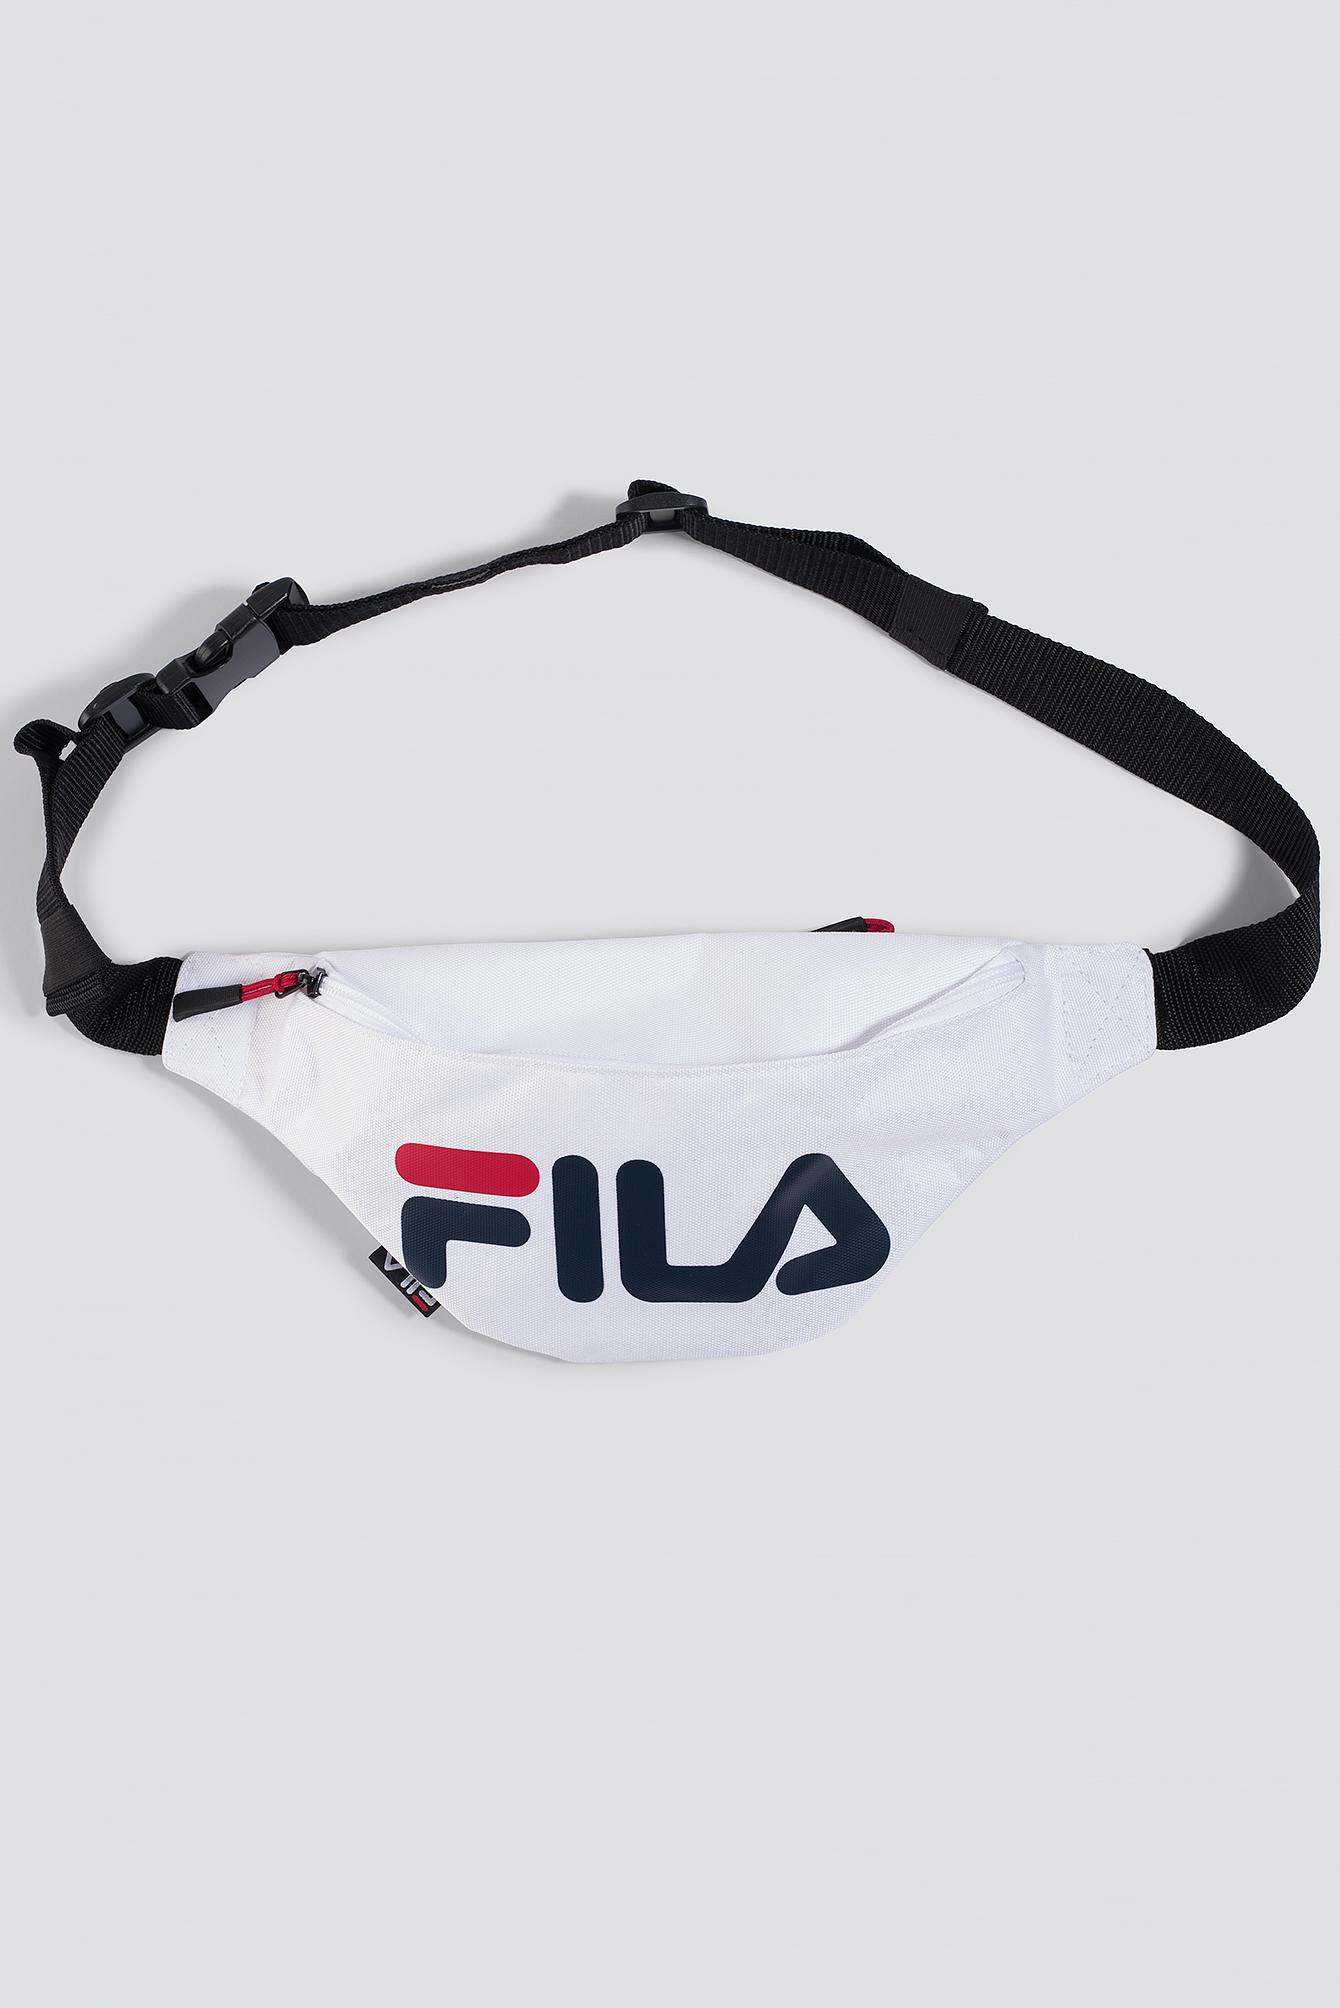 fila white belt bag